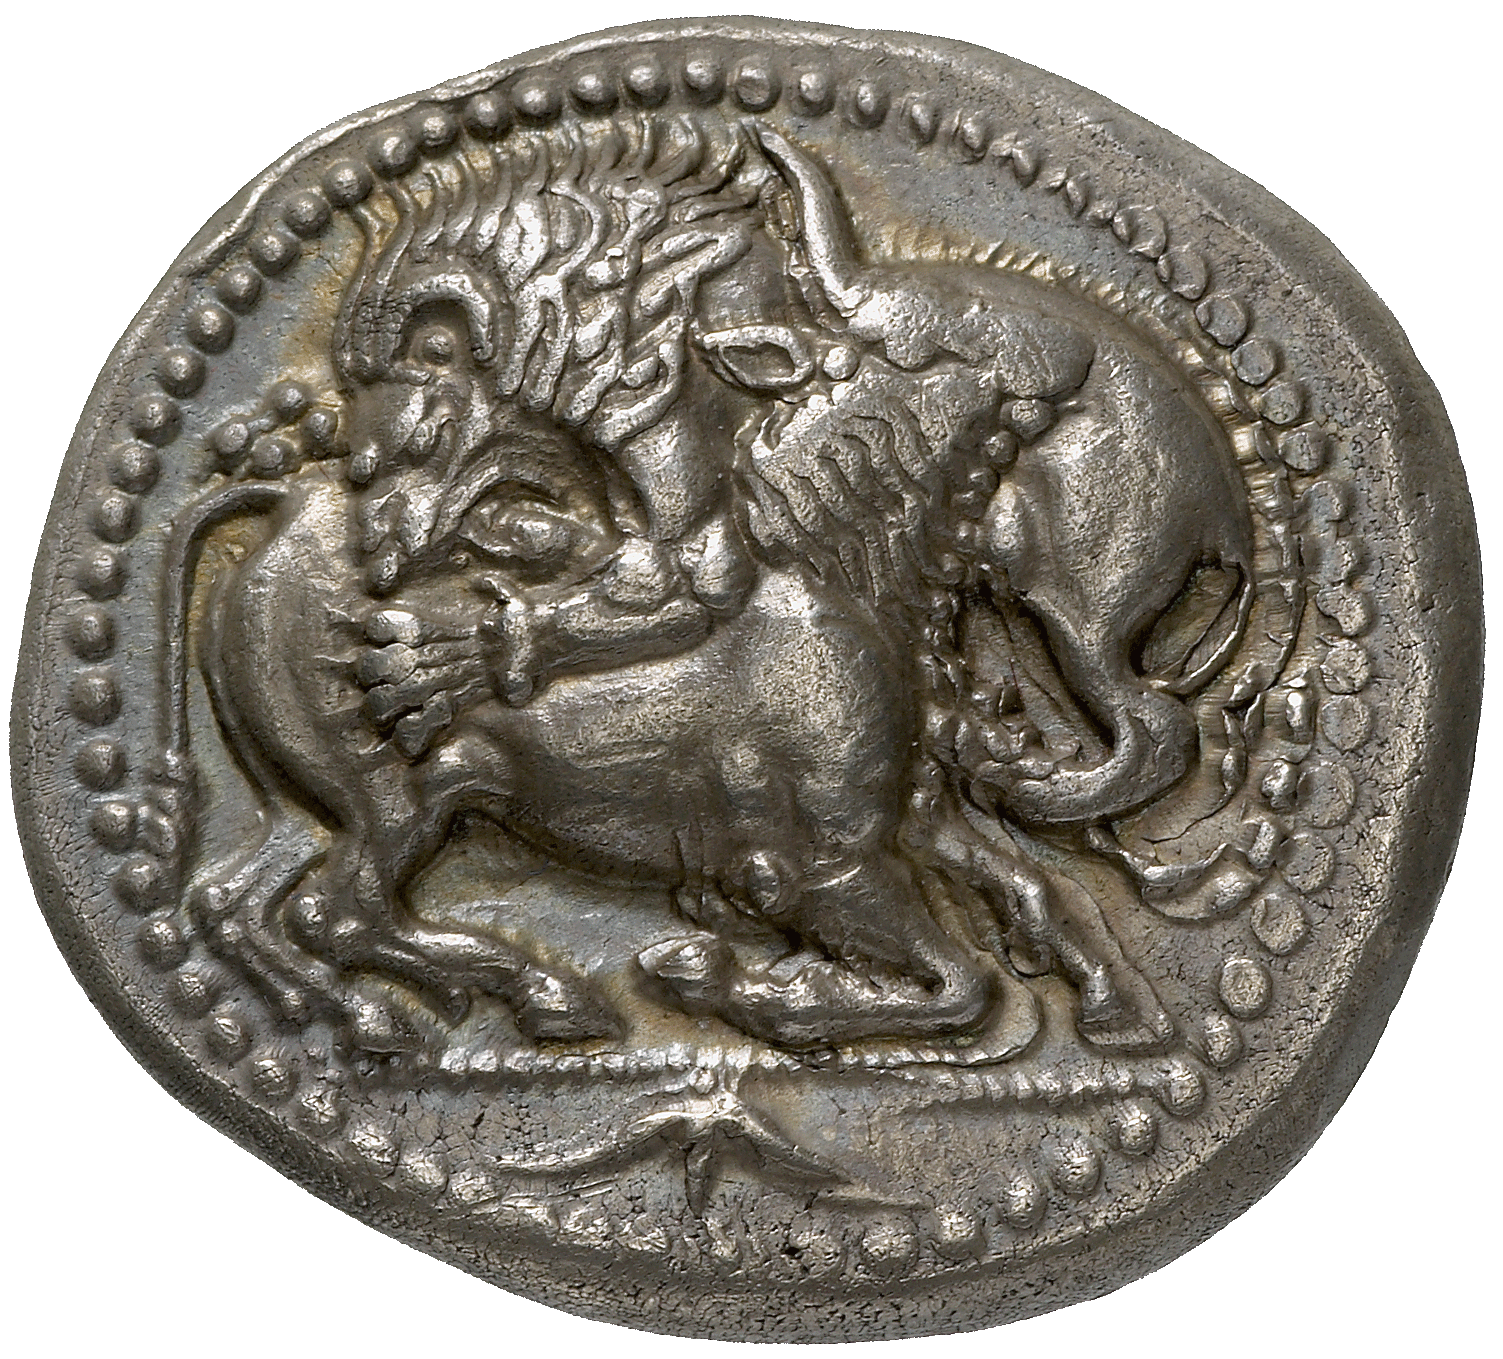 Macedonia, Acanthus, Tetradrachm (obverse)